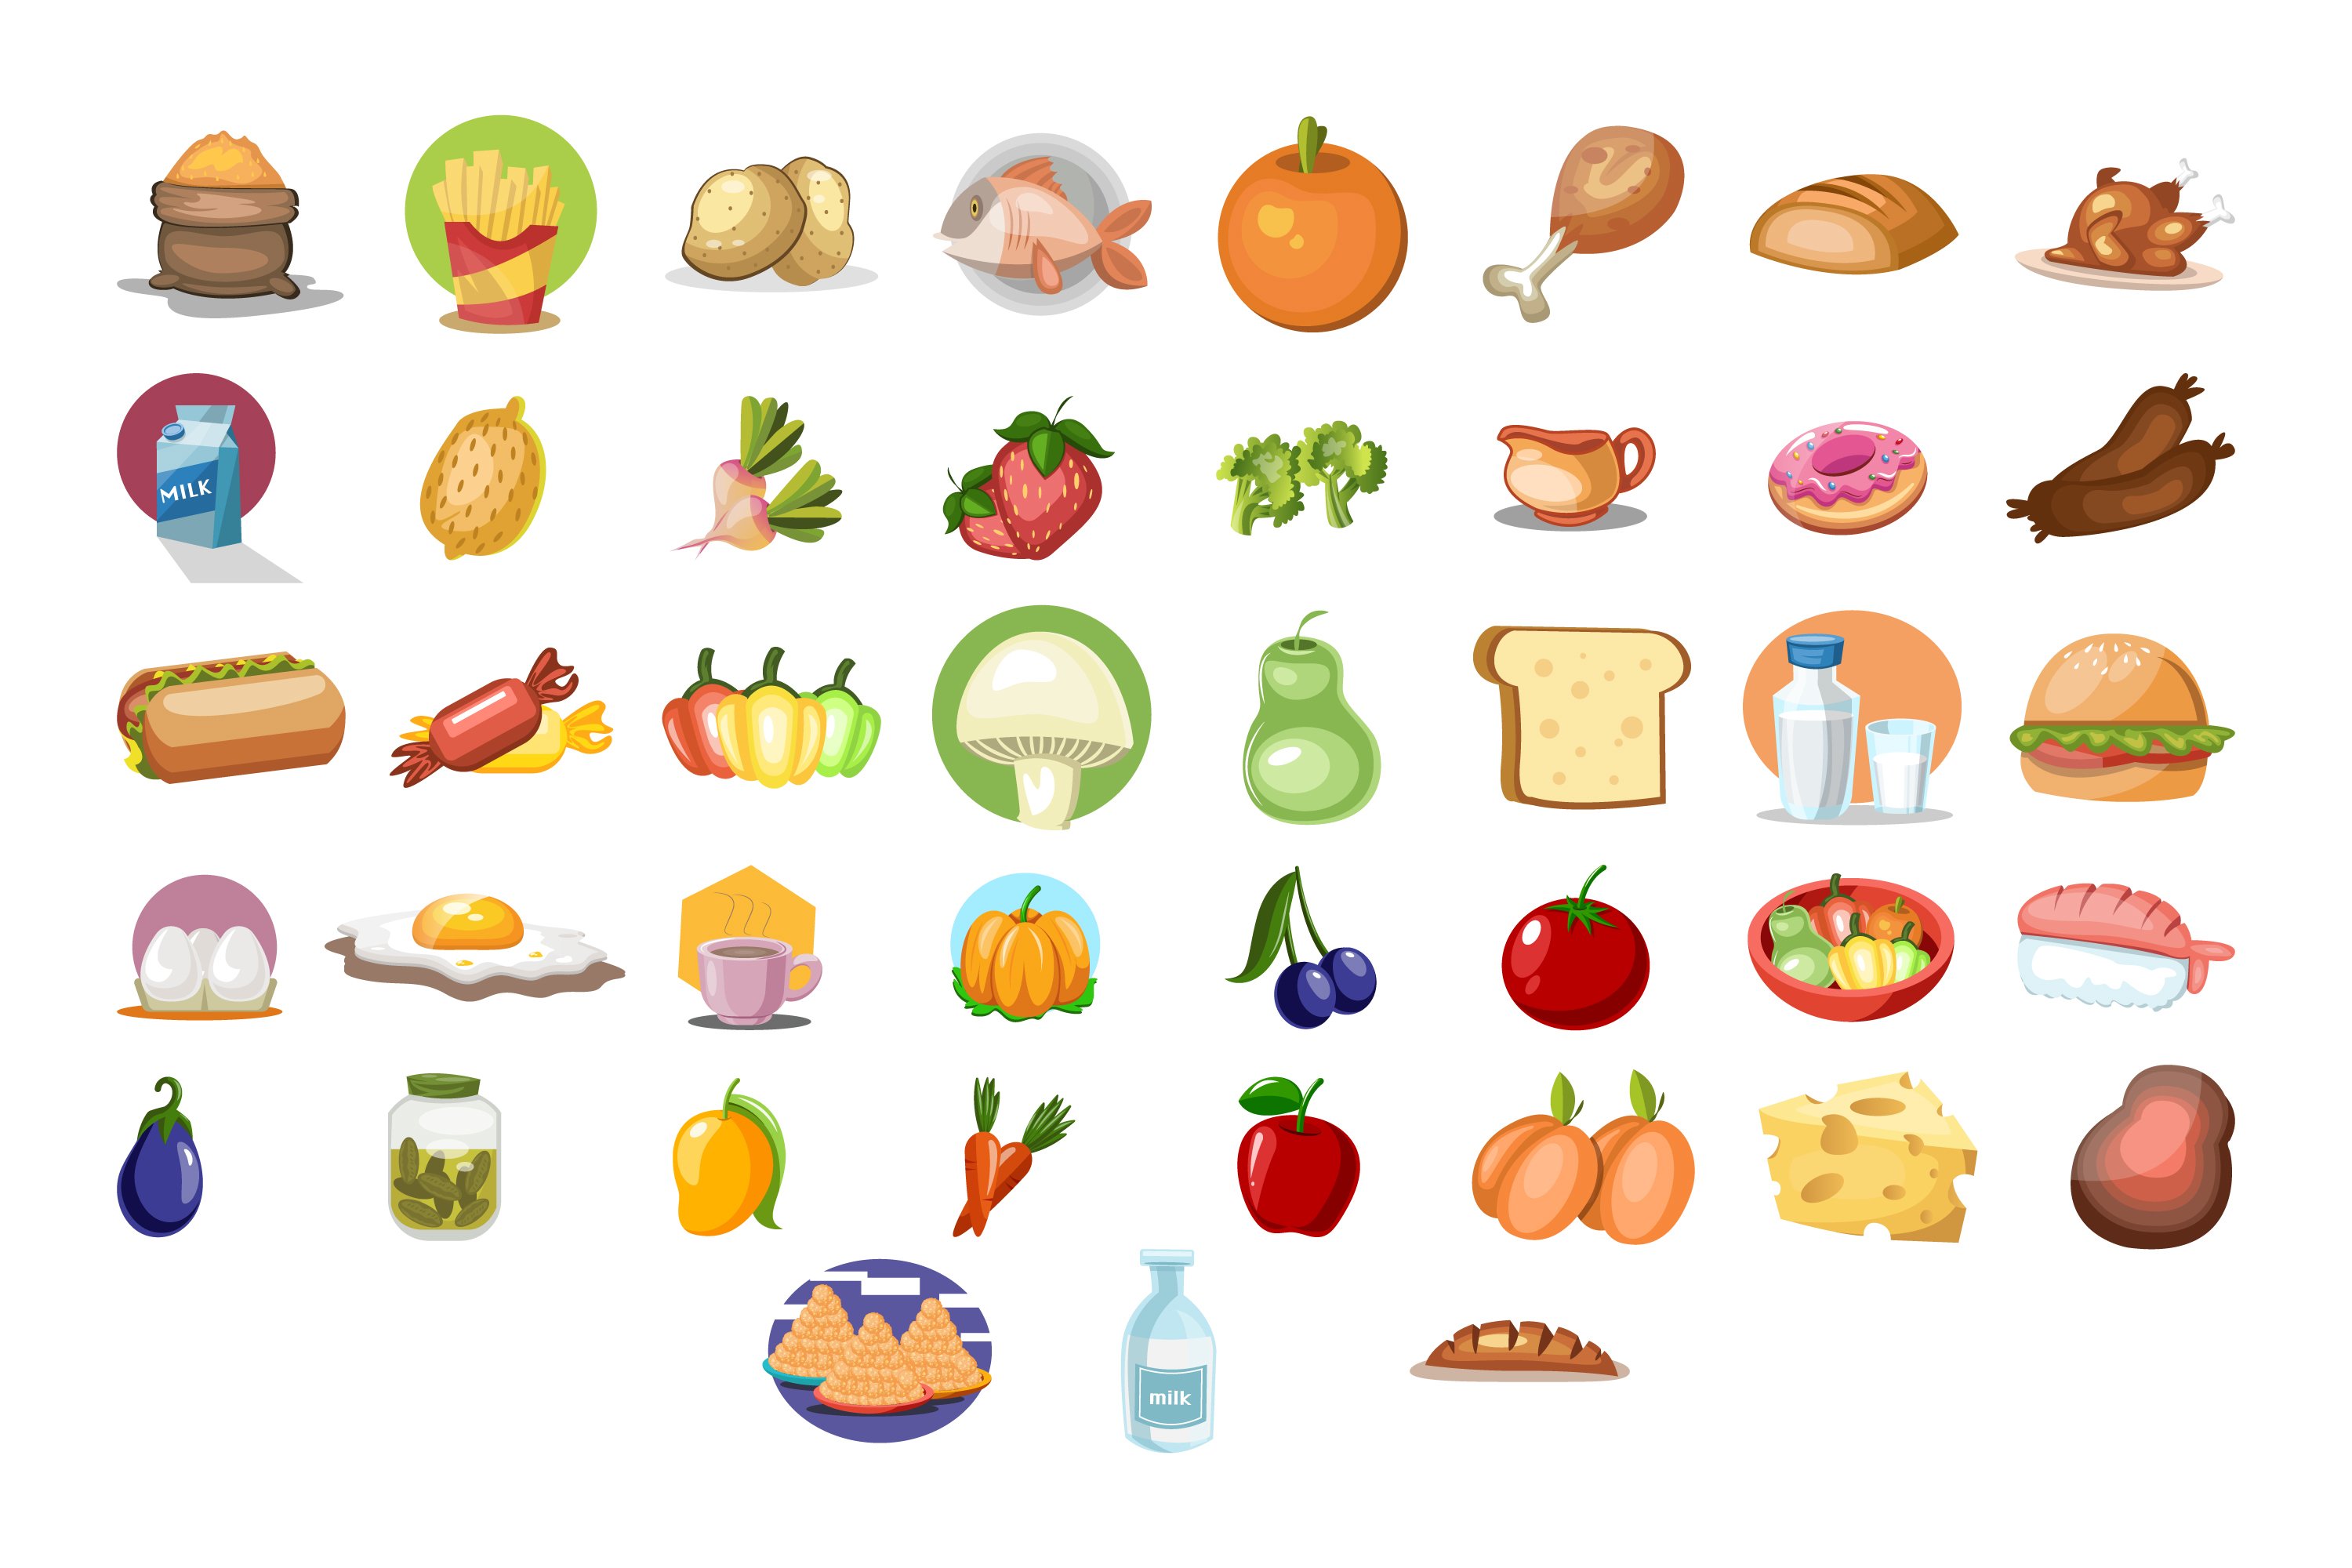 Set of cartoon images of food.